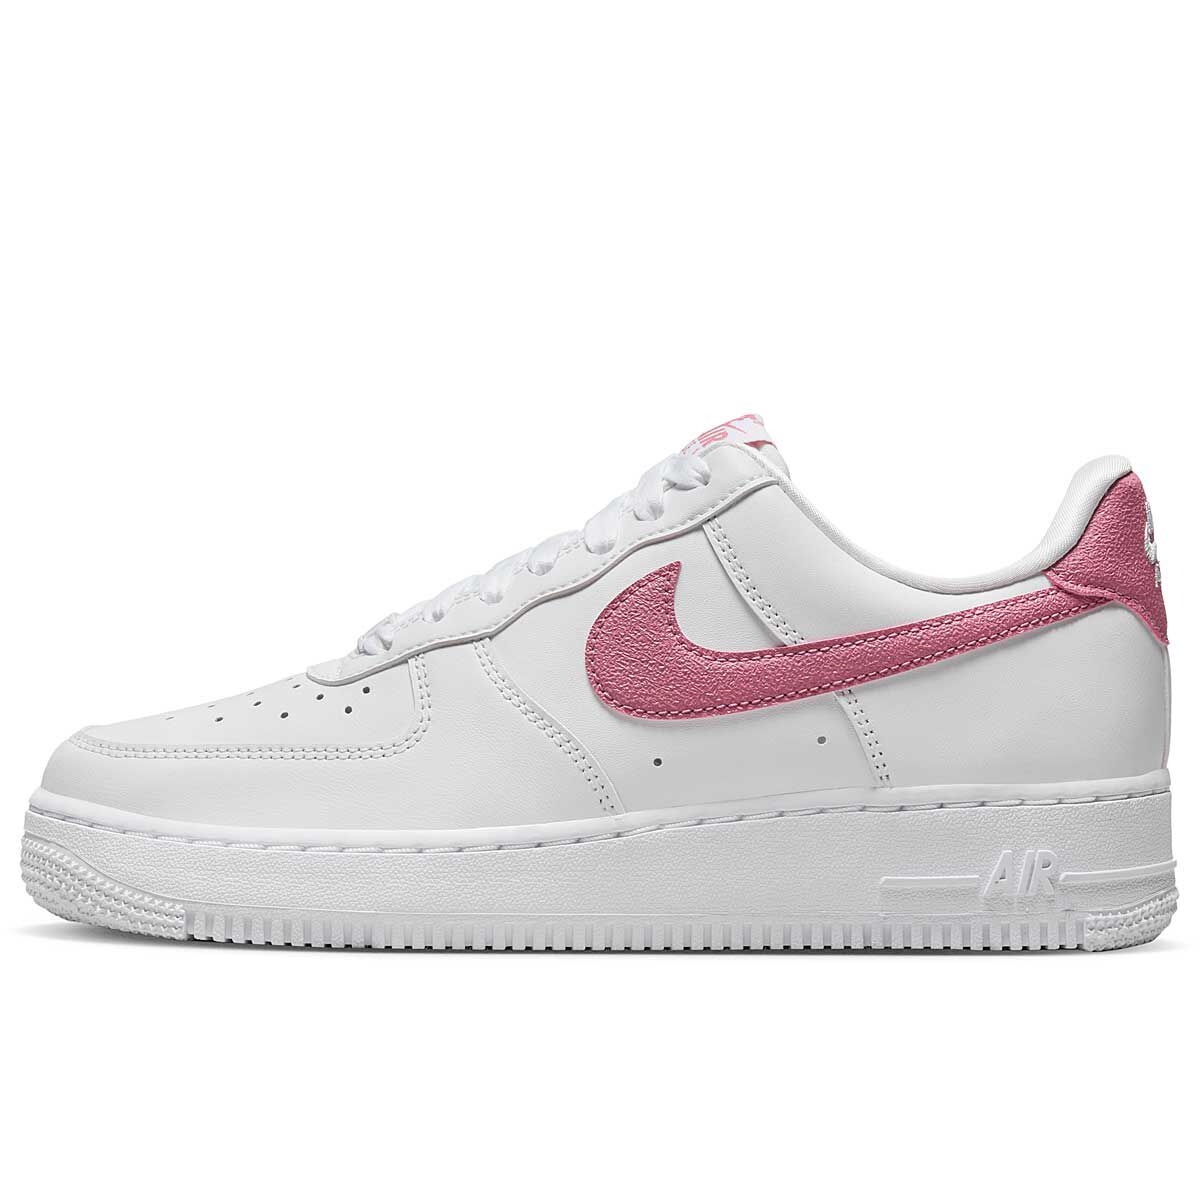 air force 1 low ess sneaker pink